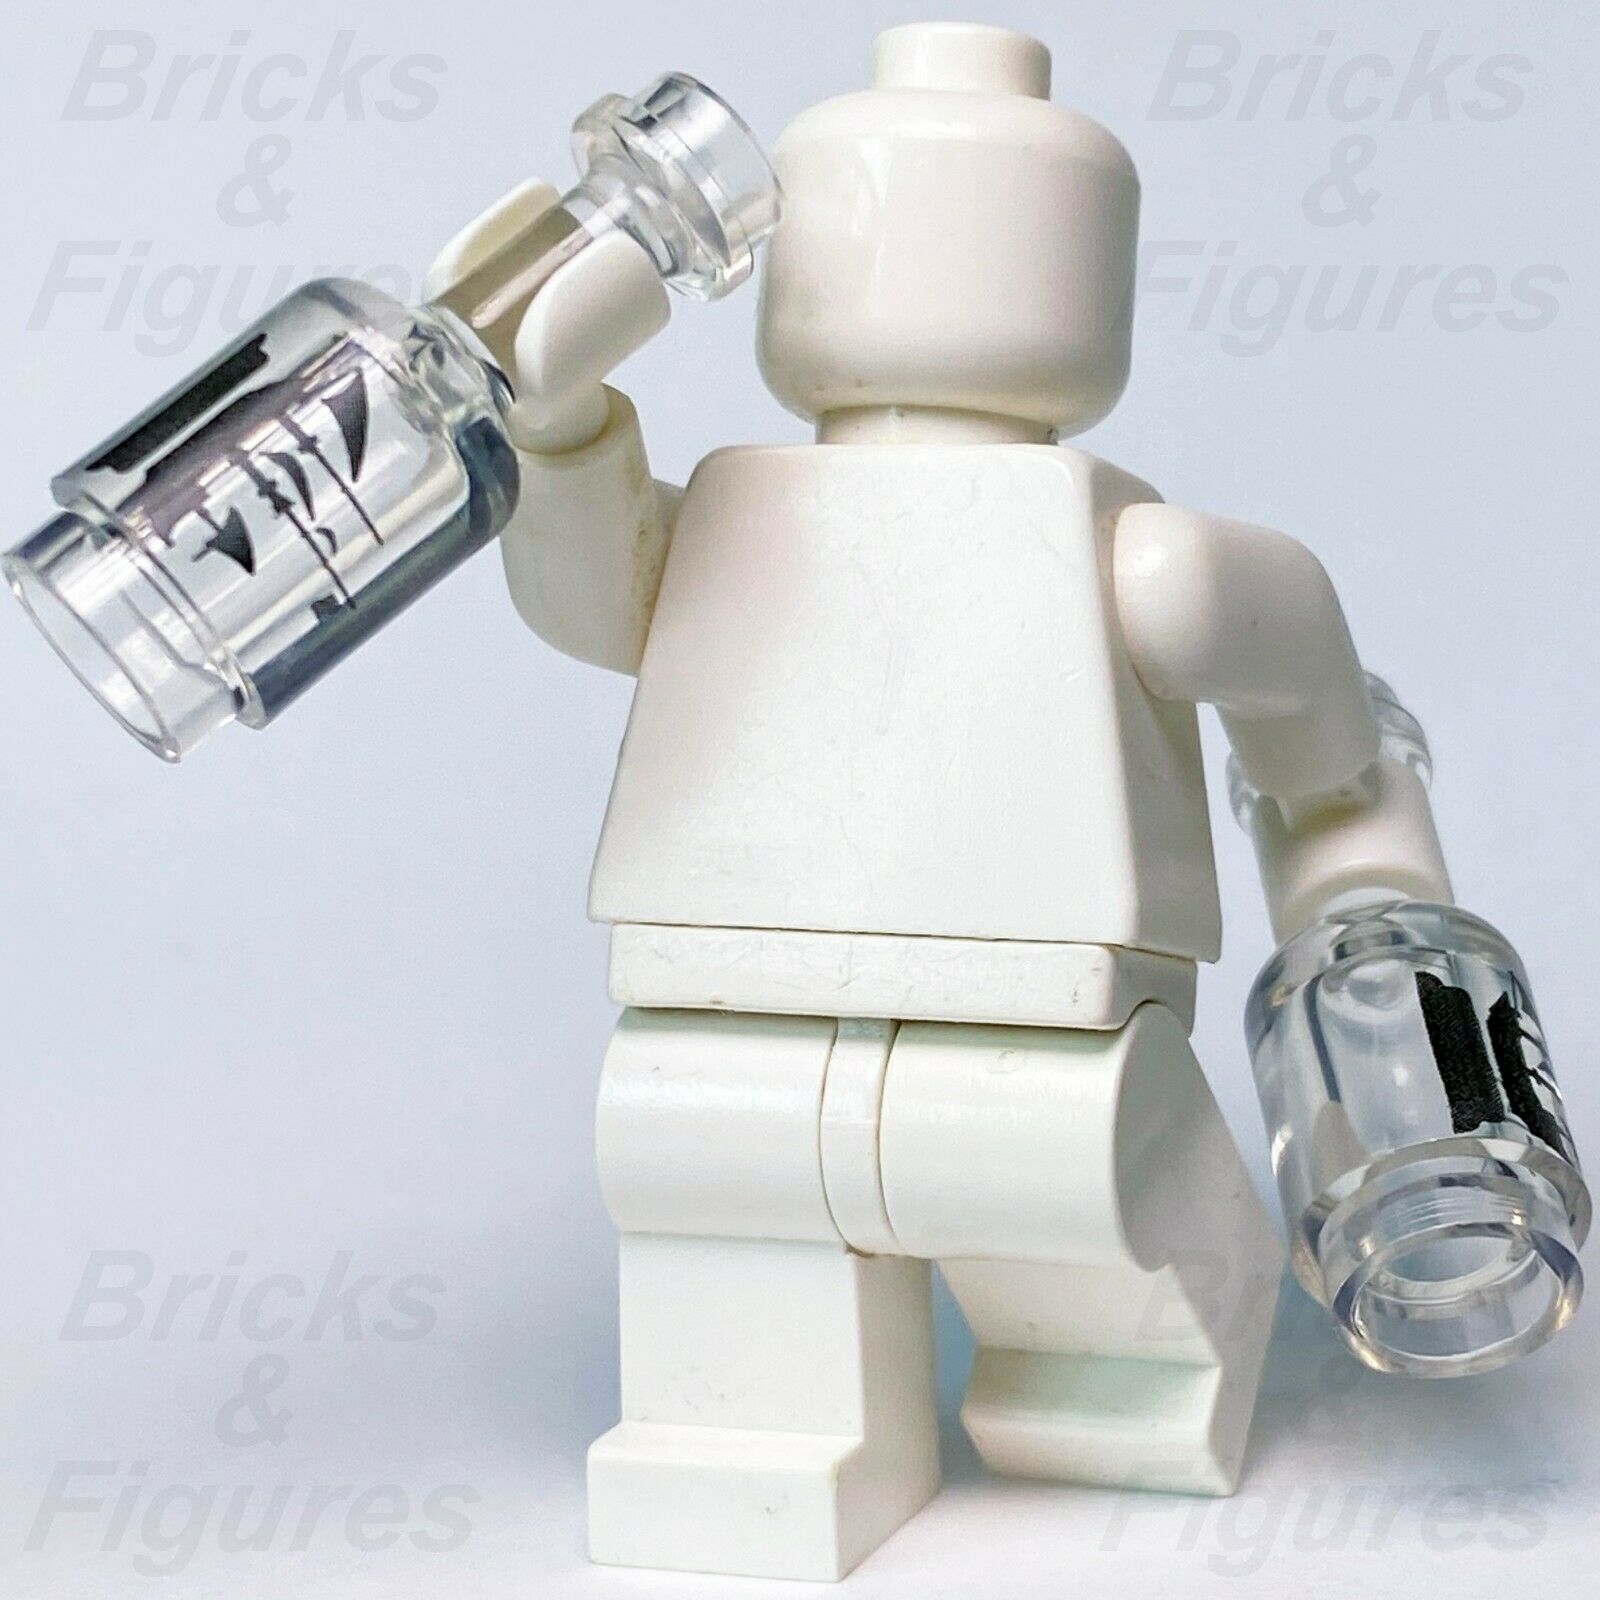 2 x New Ideas LEGO Bottle with Black Sailing Ship Pattern Parts 21318 71042 - Bricks & Figures